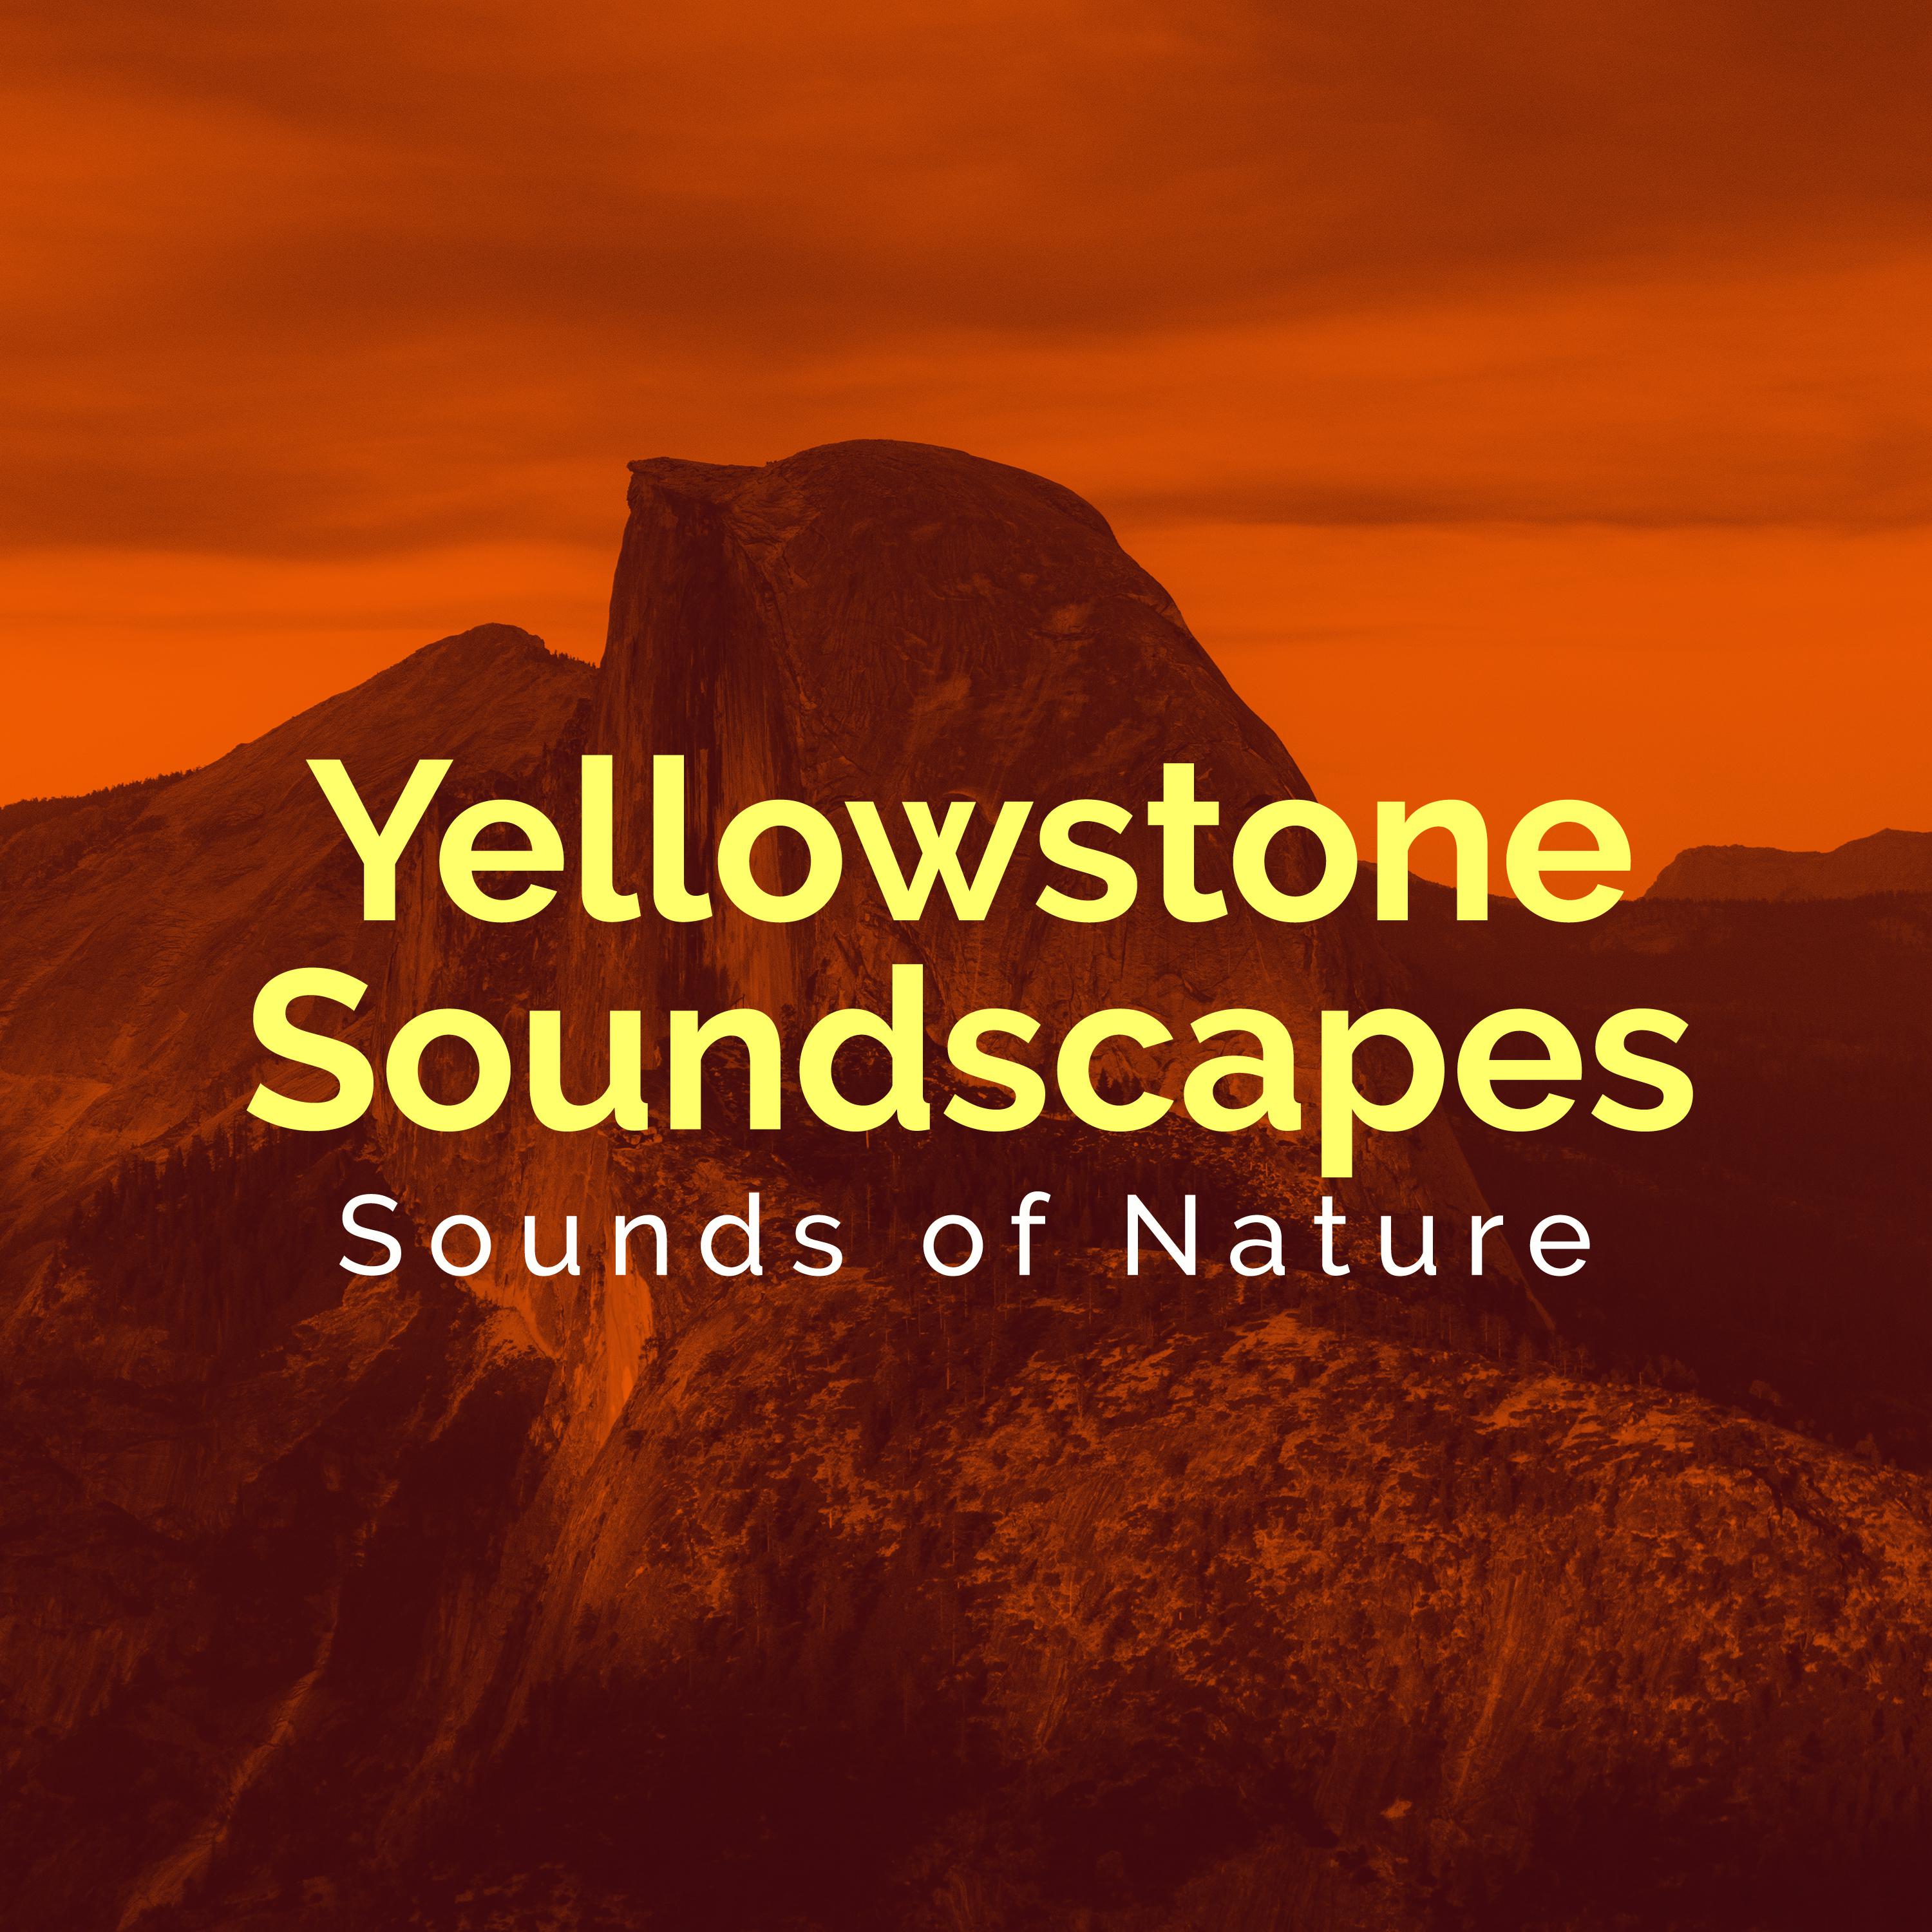 Yellowstone Soundscapes